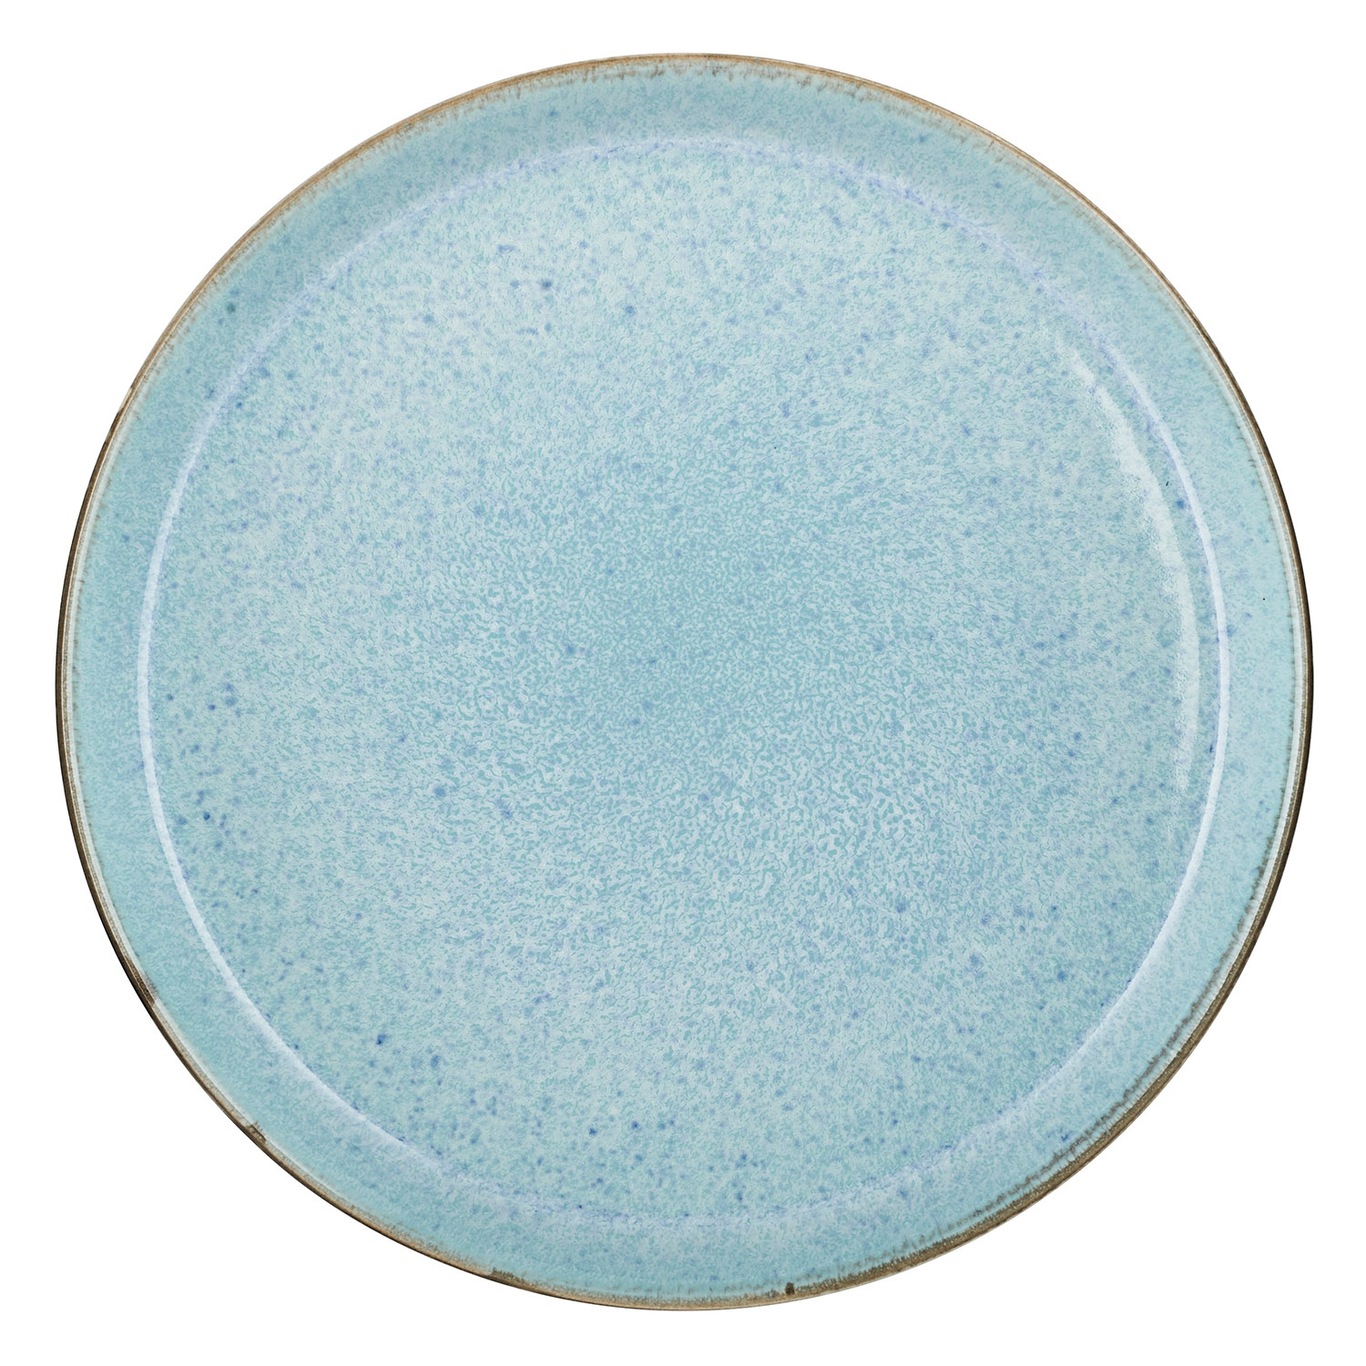 Bitz Gastro Plate 27 cm, Light Blue